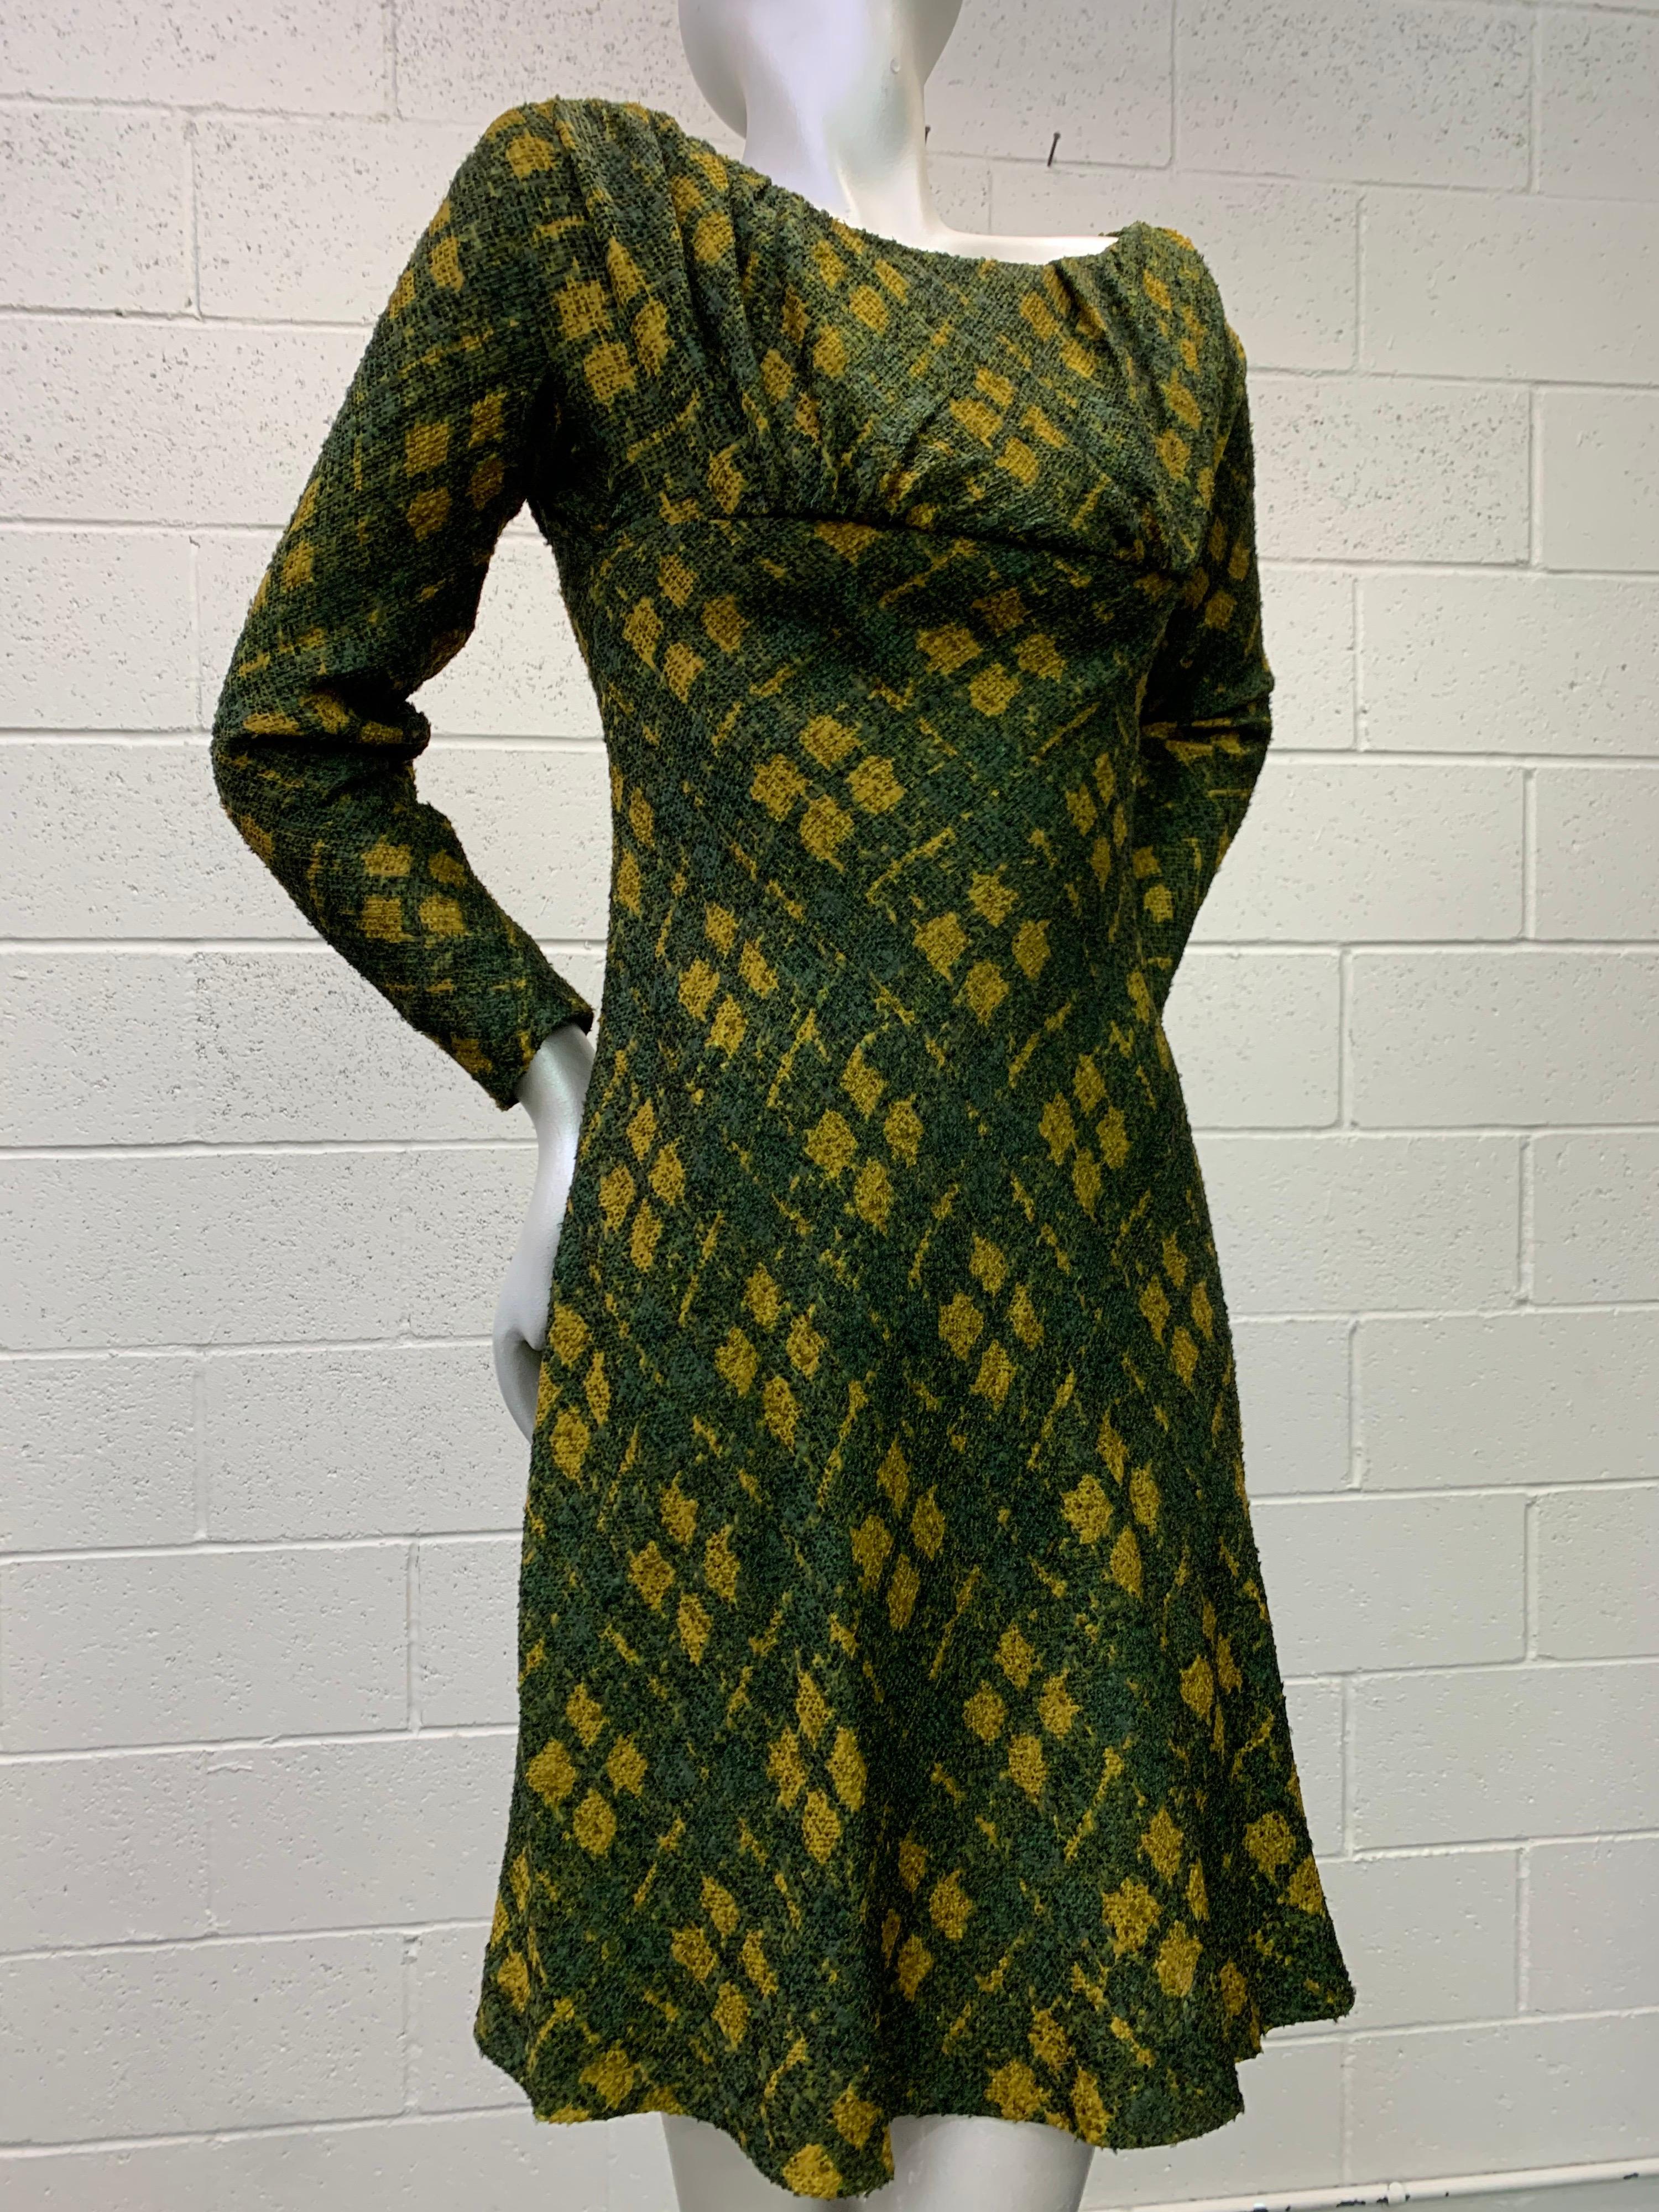 1950 Galanos Olive & Mustard Color Fine Wool Boucle Dress & Cape Ensemble For Sale 8